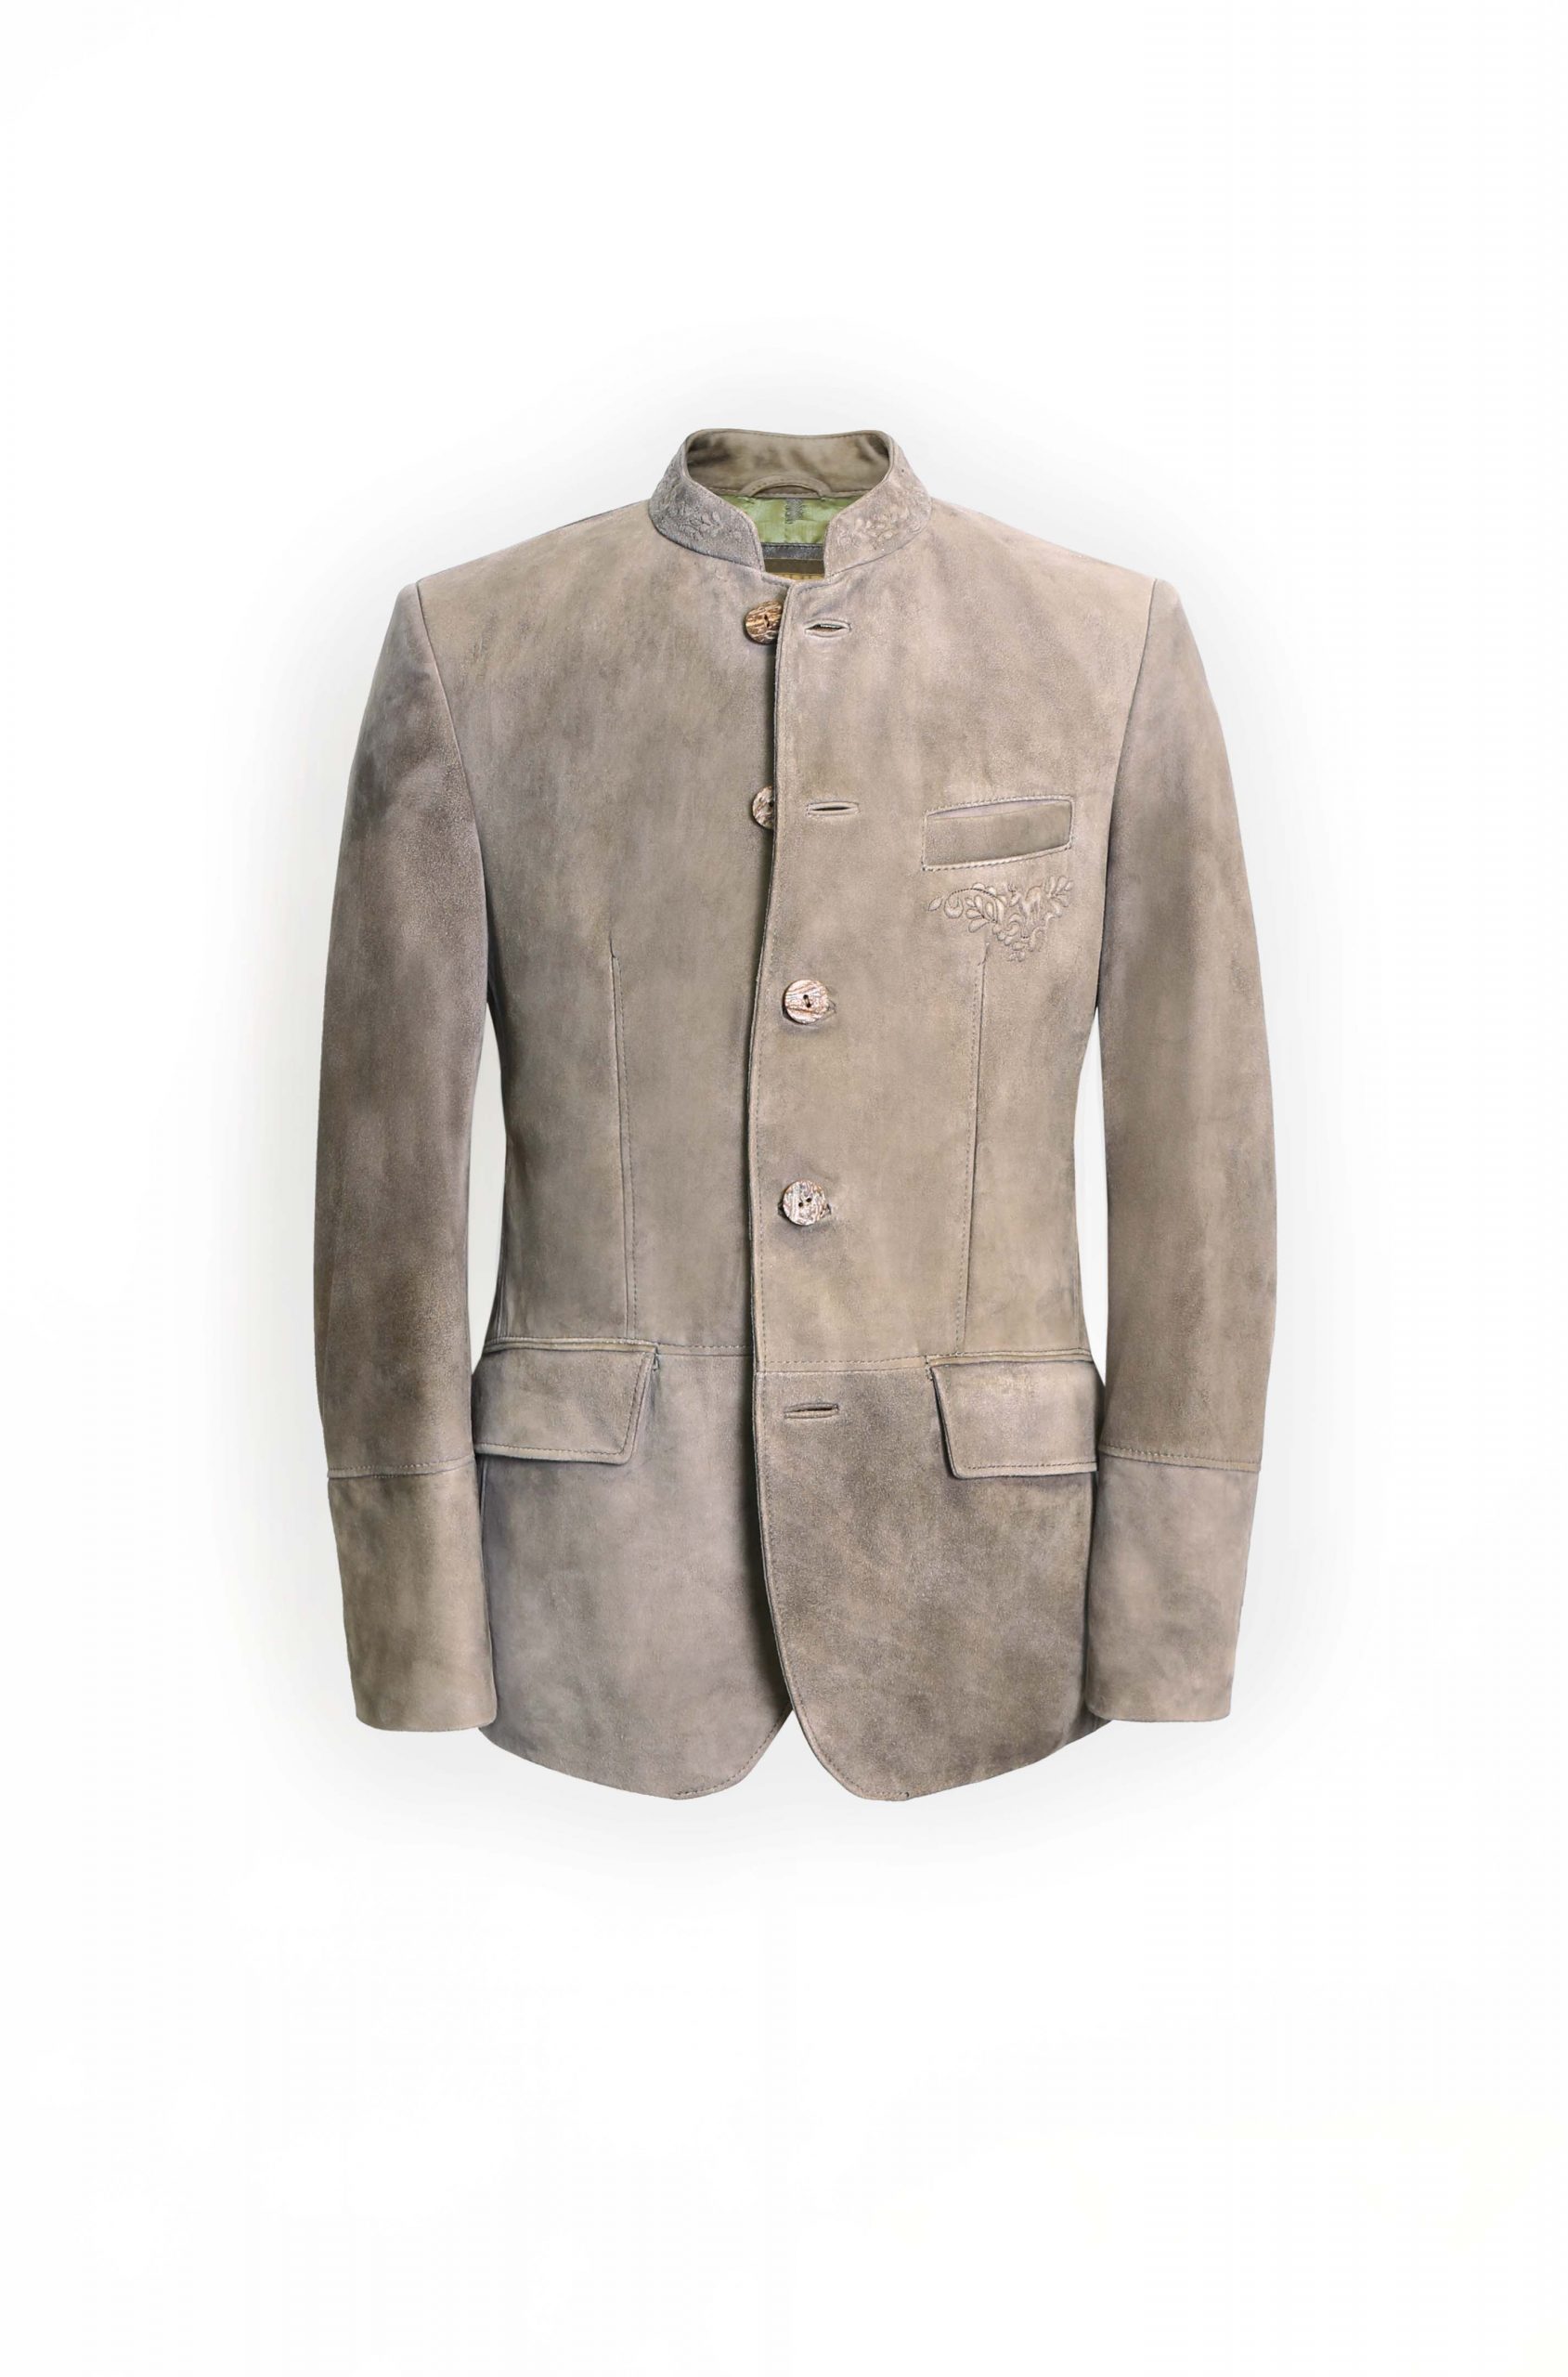 Goat Leather Jacket Men “Hirschkogel”, dust